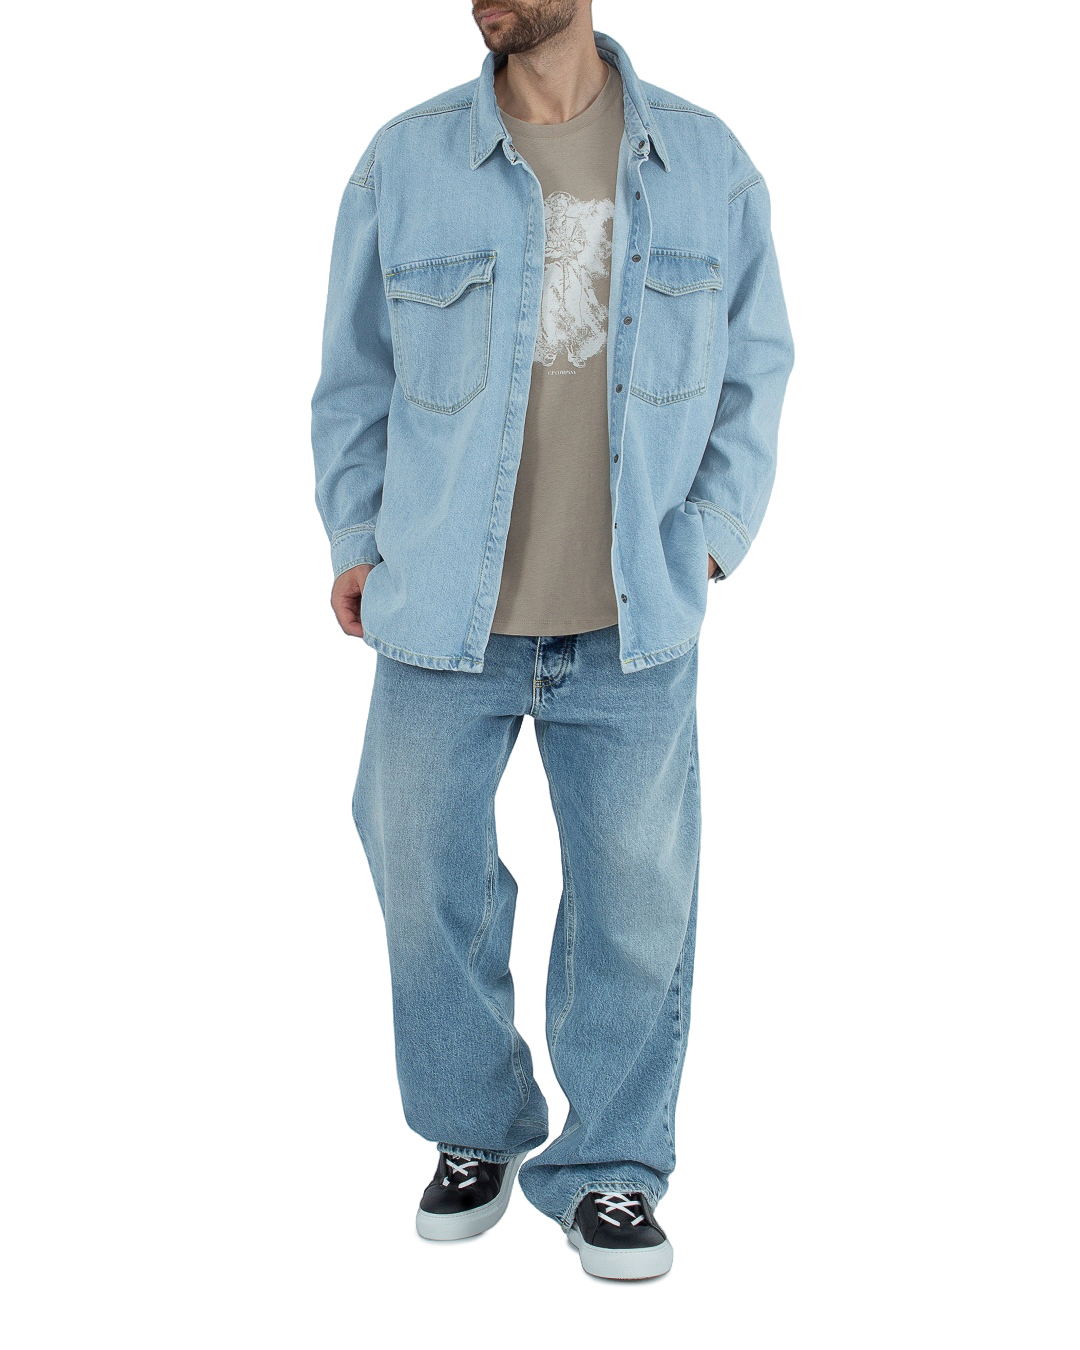 джинсы ICON DENIM WILLID754 синий 36, размер 36 - фото 2